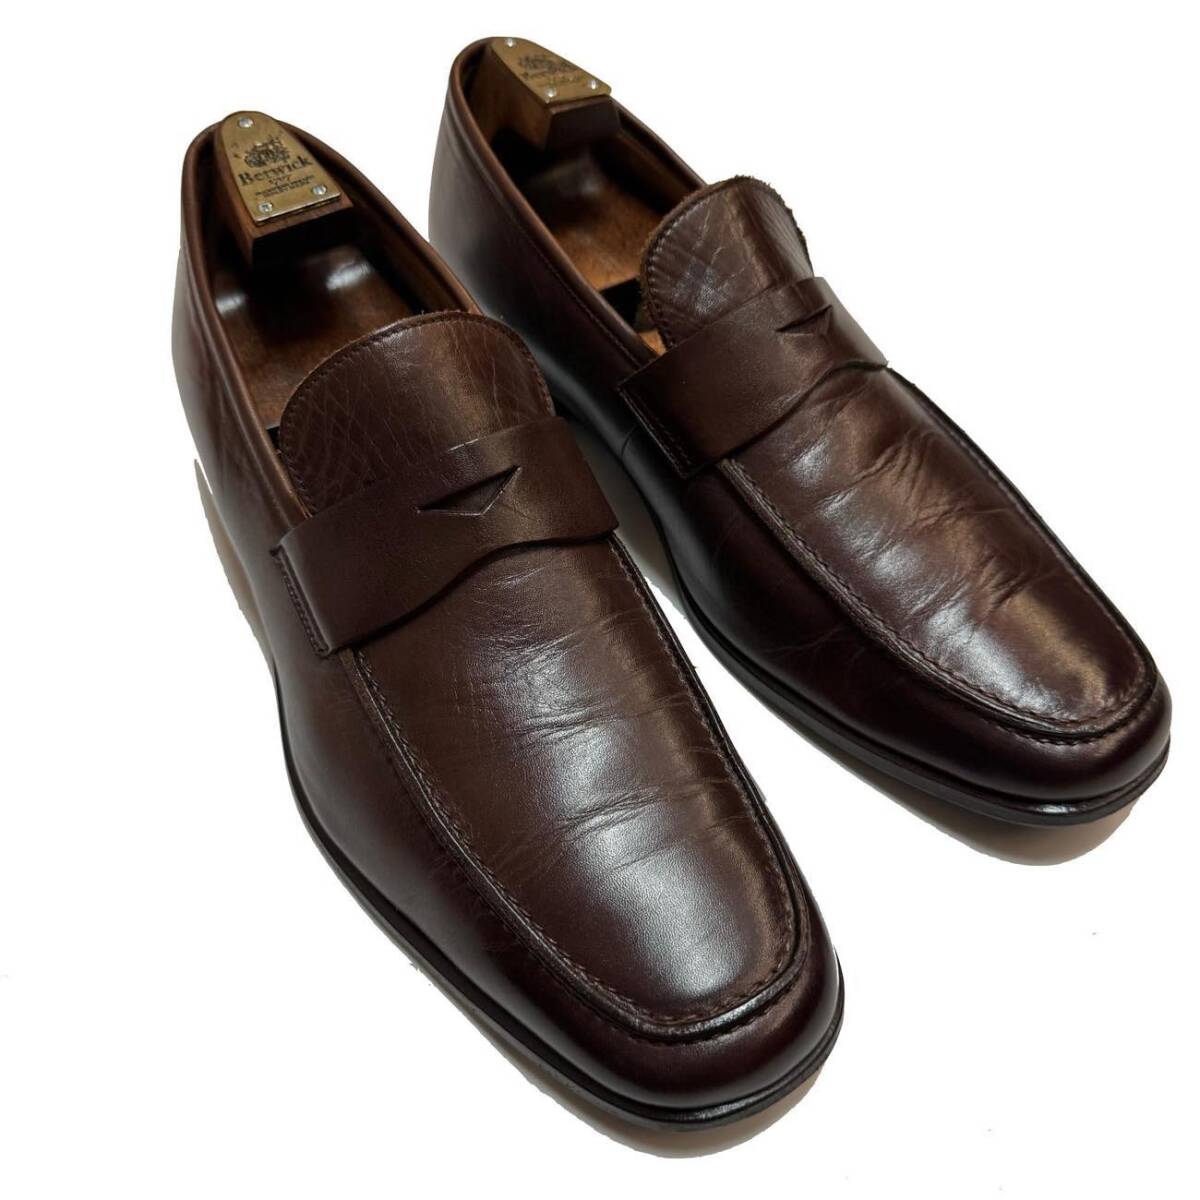 26cm REGAL リーガル コインローファー レザーシューズ 革靴 ビジネスシューズ メンズ ブラウン レザーソール 日本製 男性用 629 茶靴の画像1